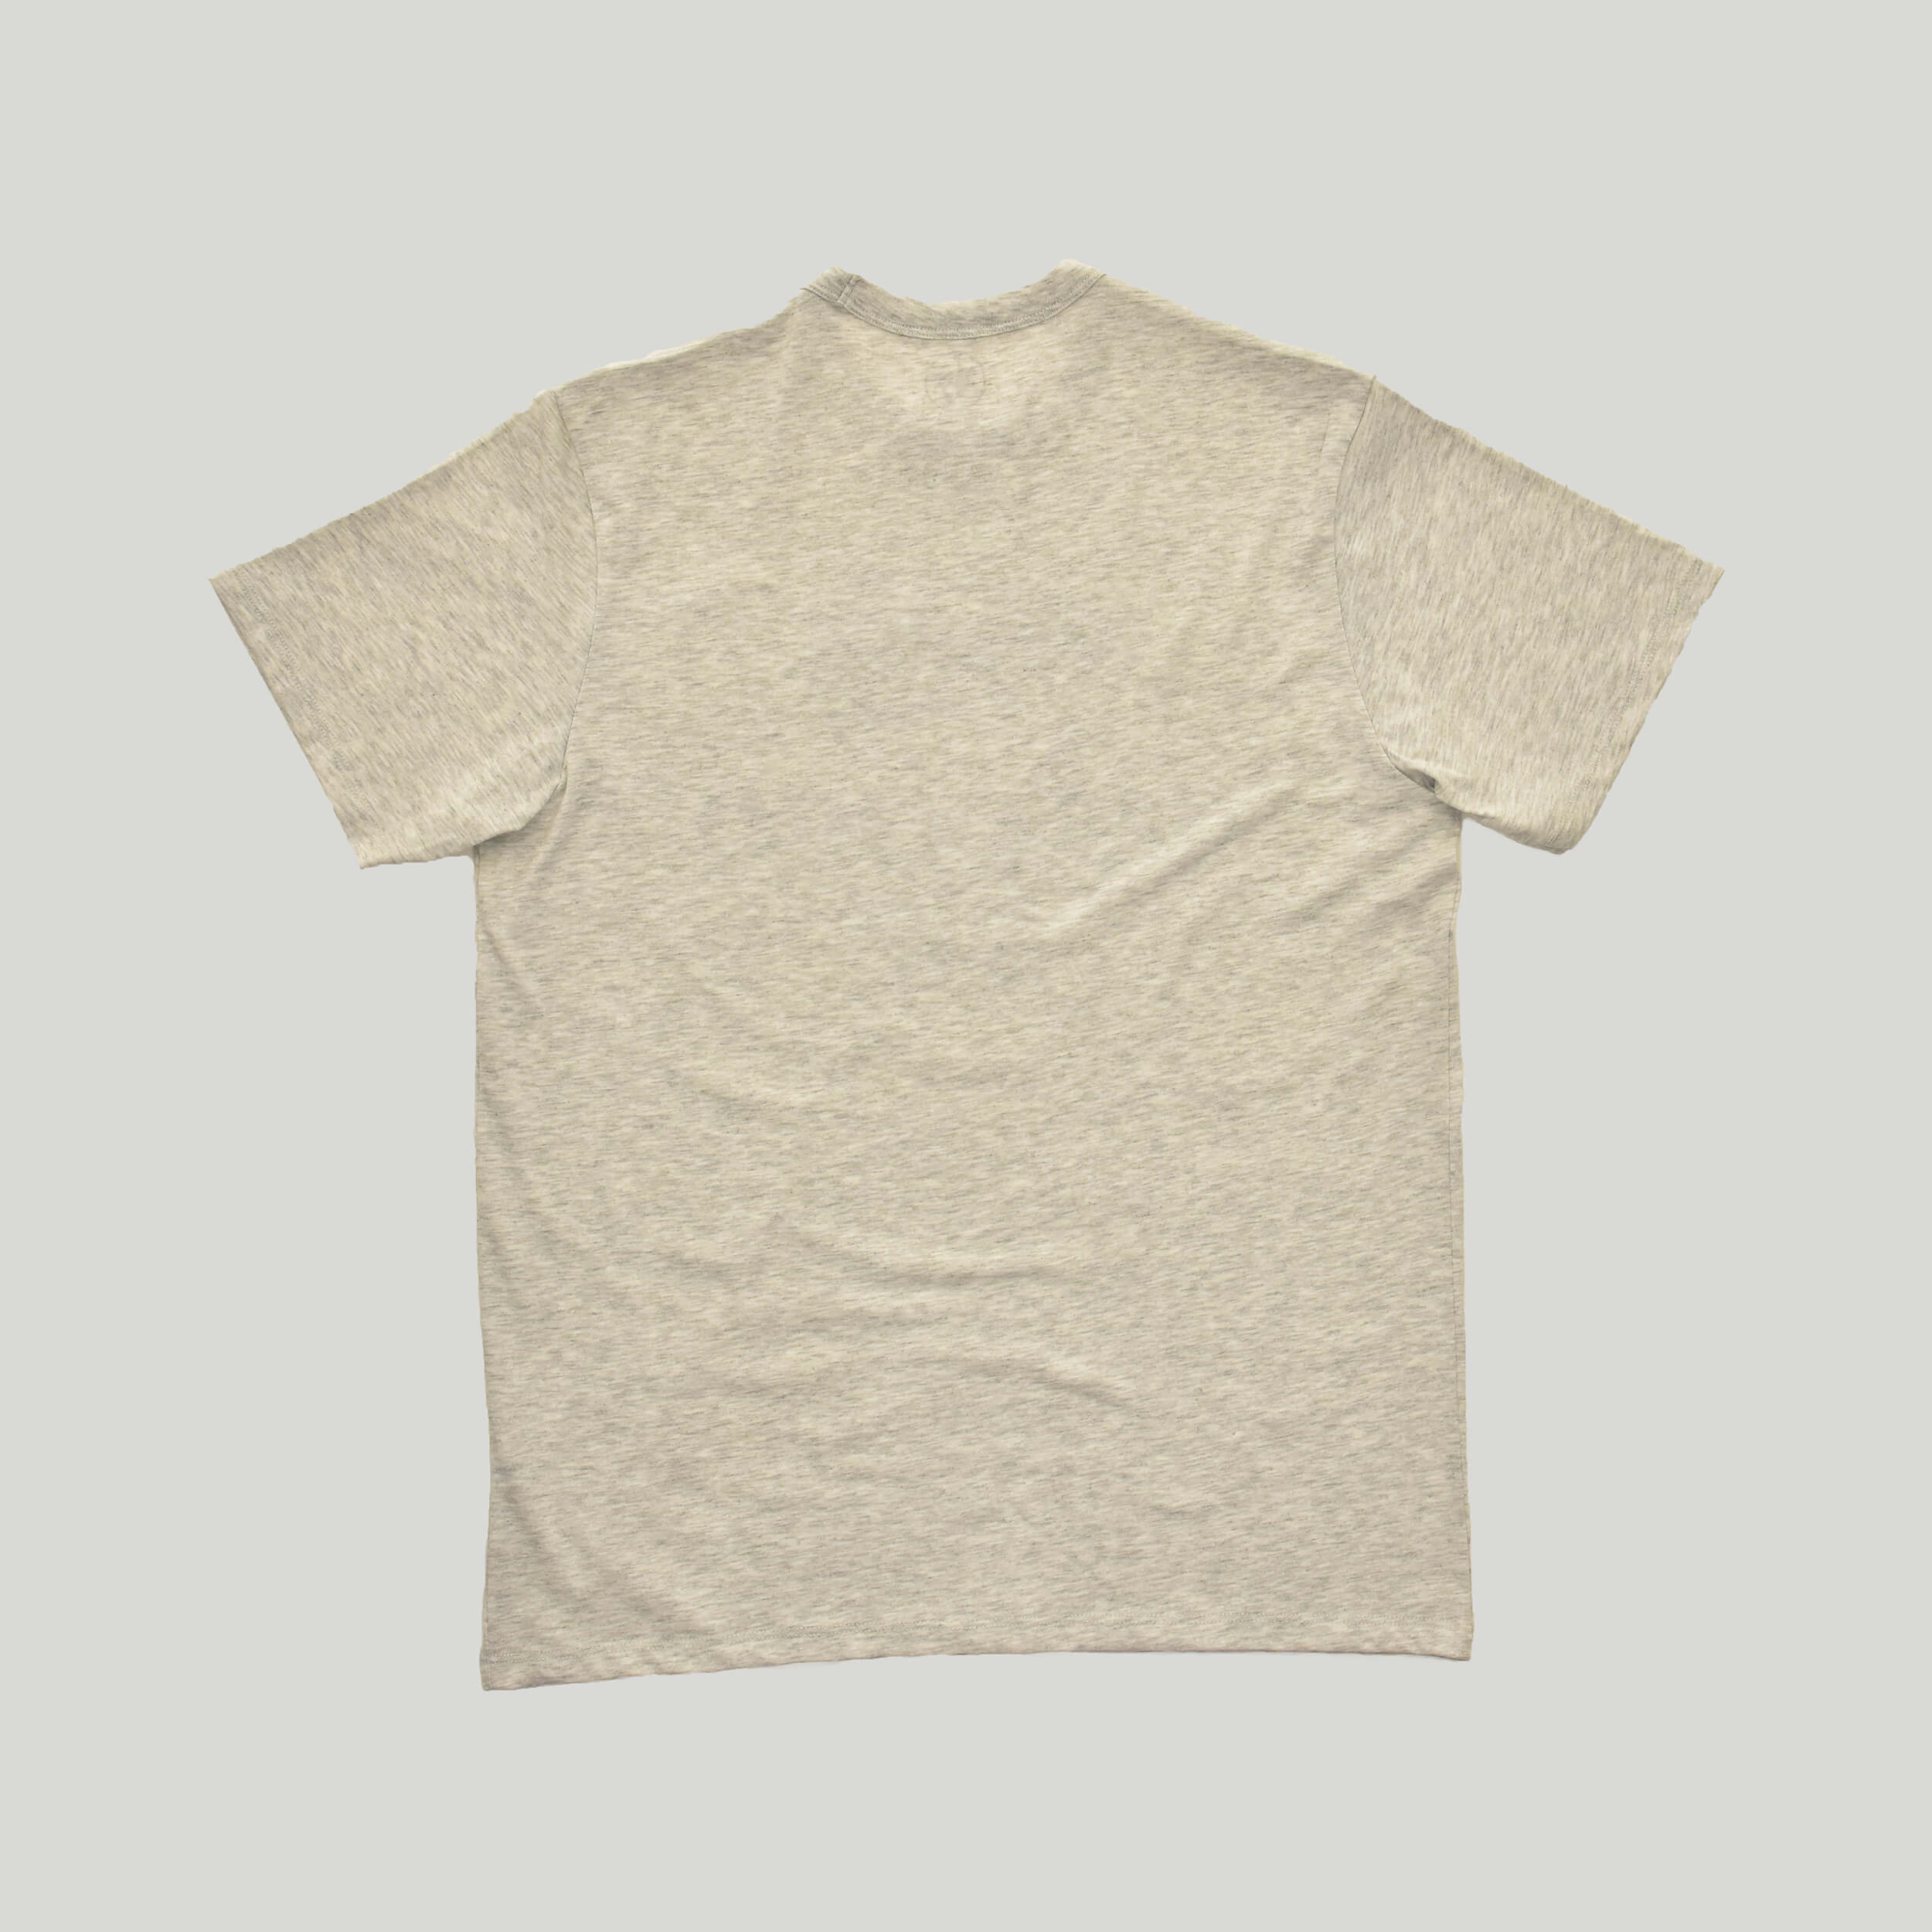 47 Brand / Men's Colorado Rockies Gray Bars Franklin T-Shirt